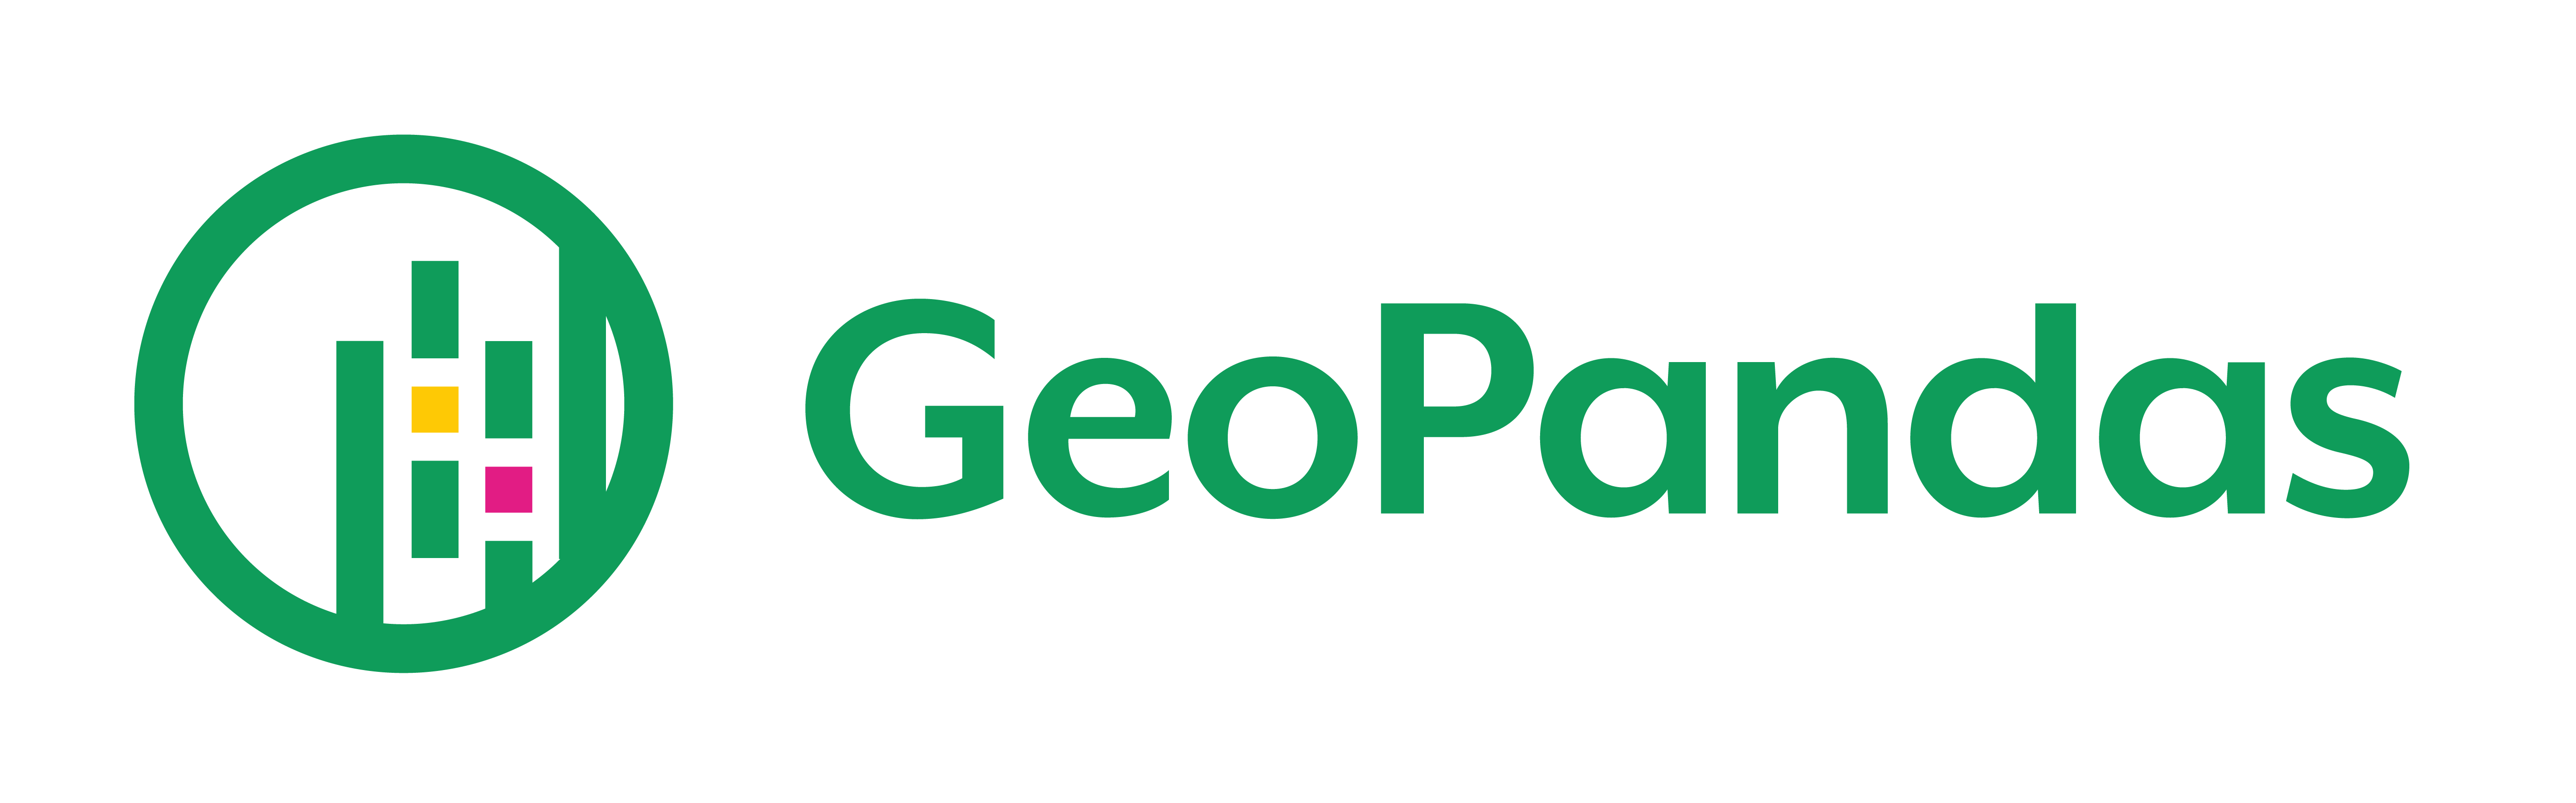 geopandas-logo